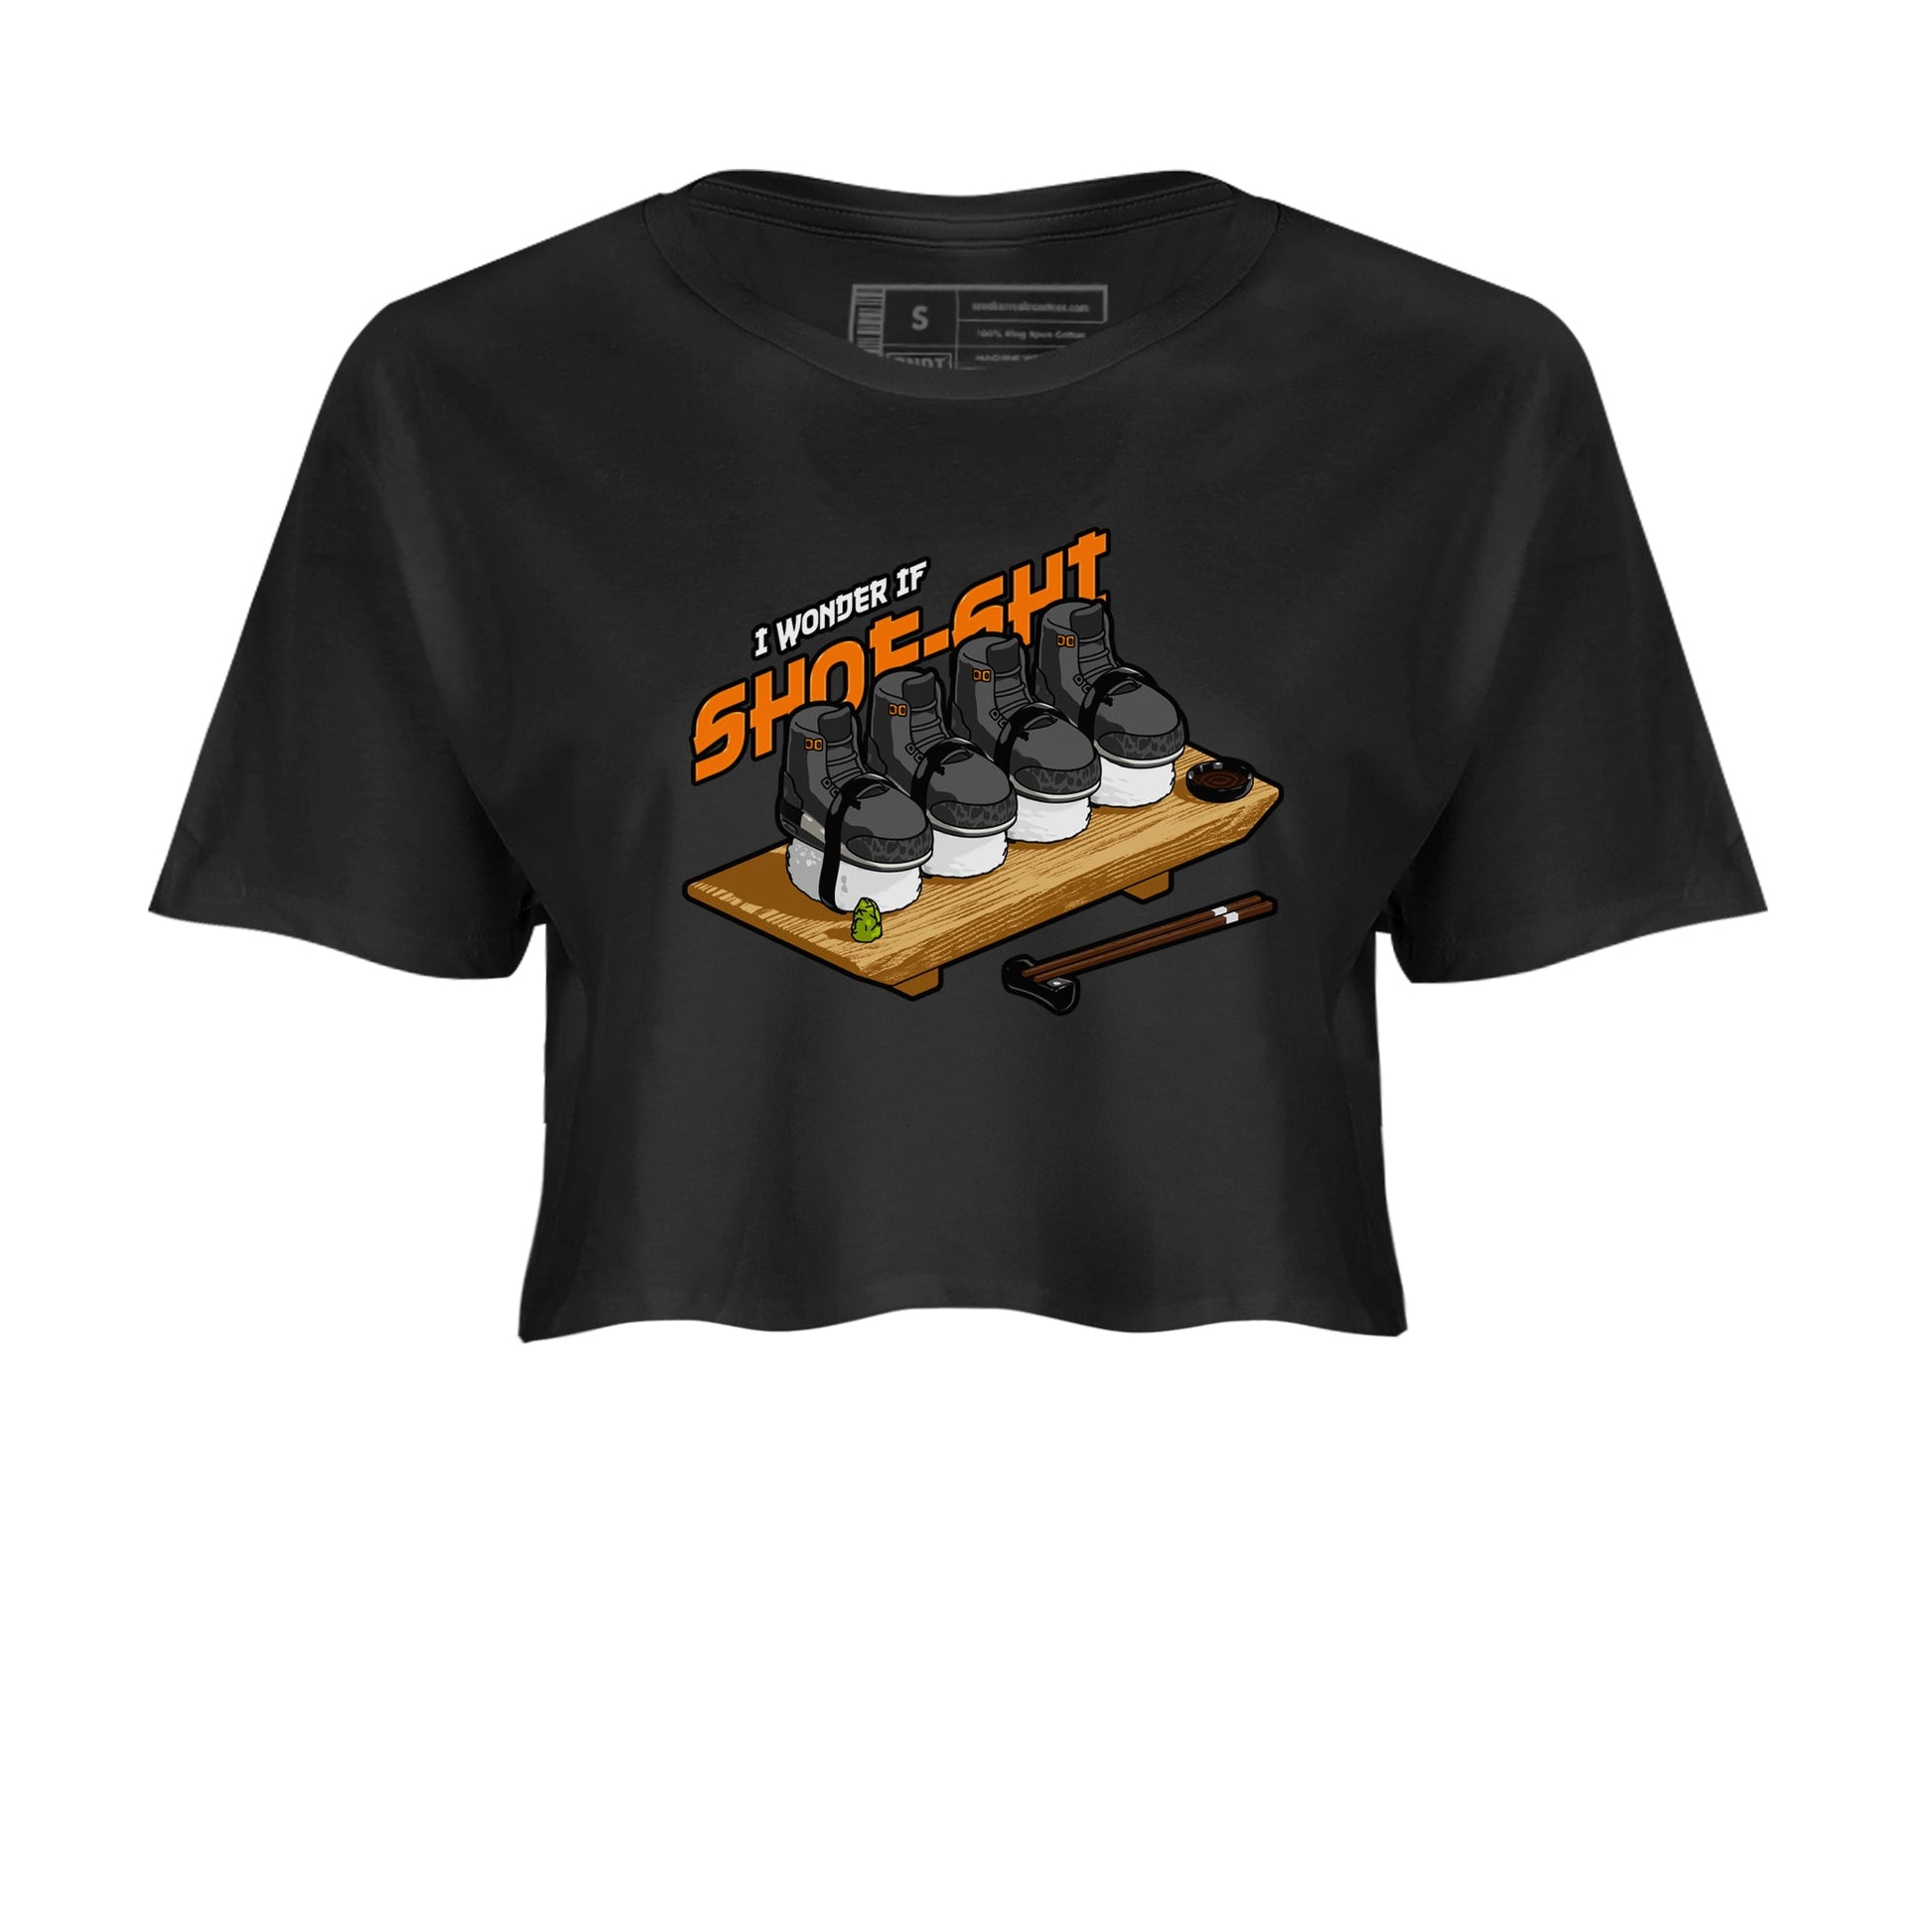 3s Fear shirt to match jordans Shoe-Shi sneaker tees Air Jordan 3 Fear SNRT Sneaker Release Tees Black 2 Crop T-Shirt